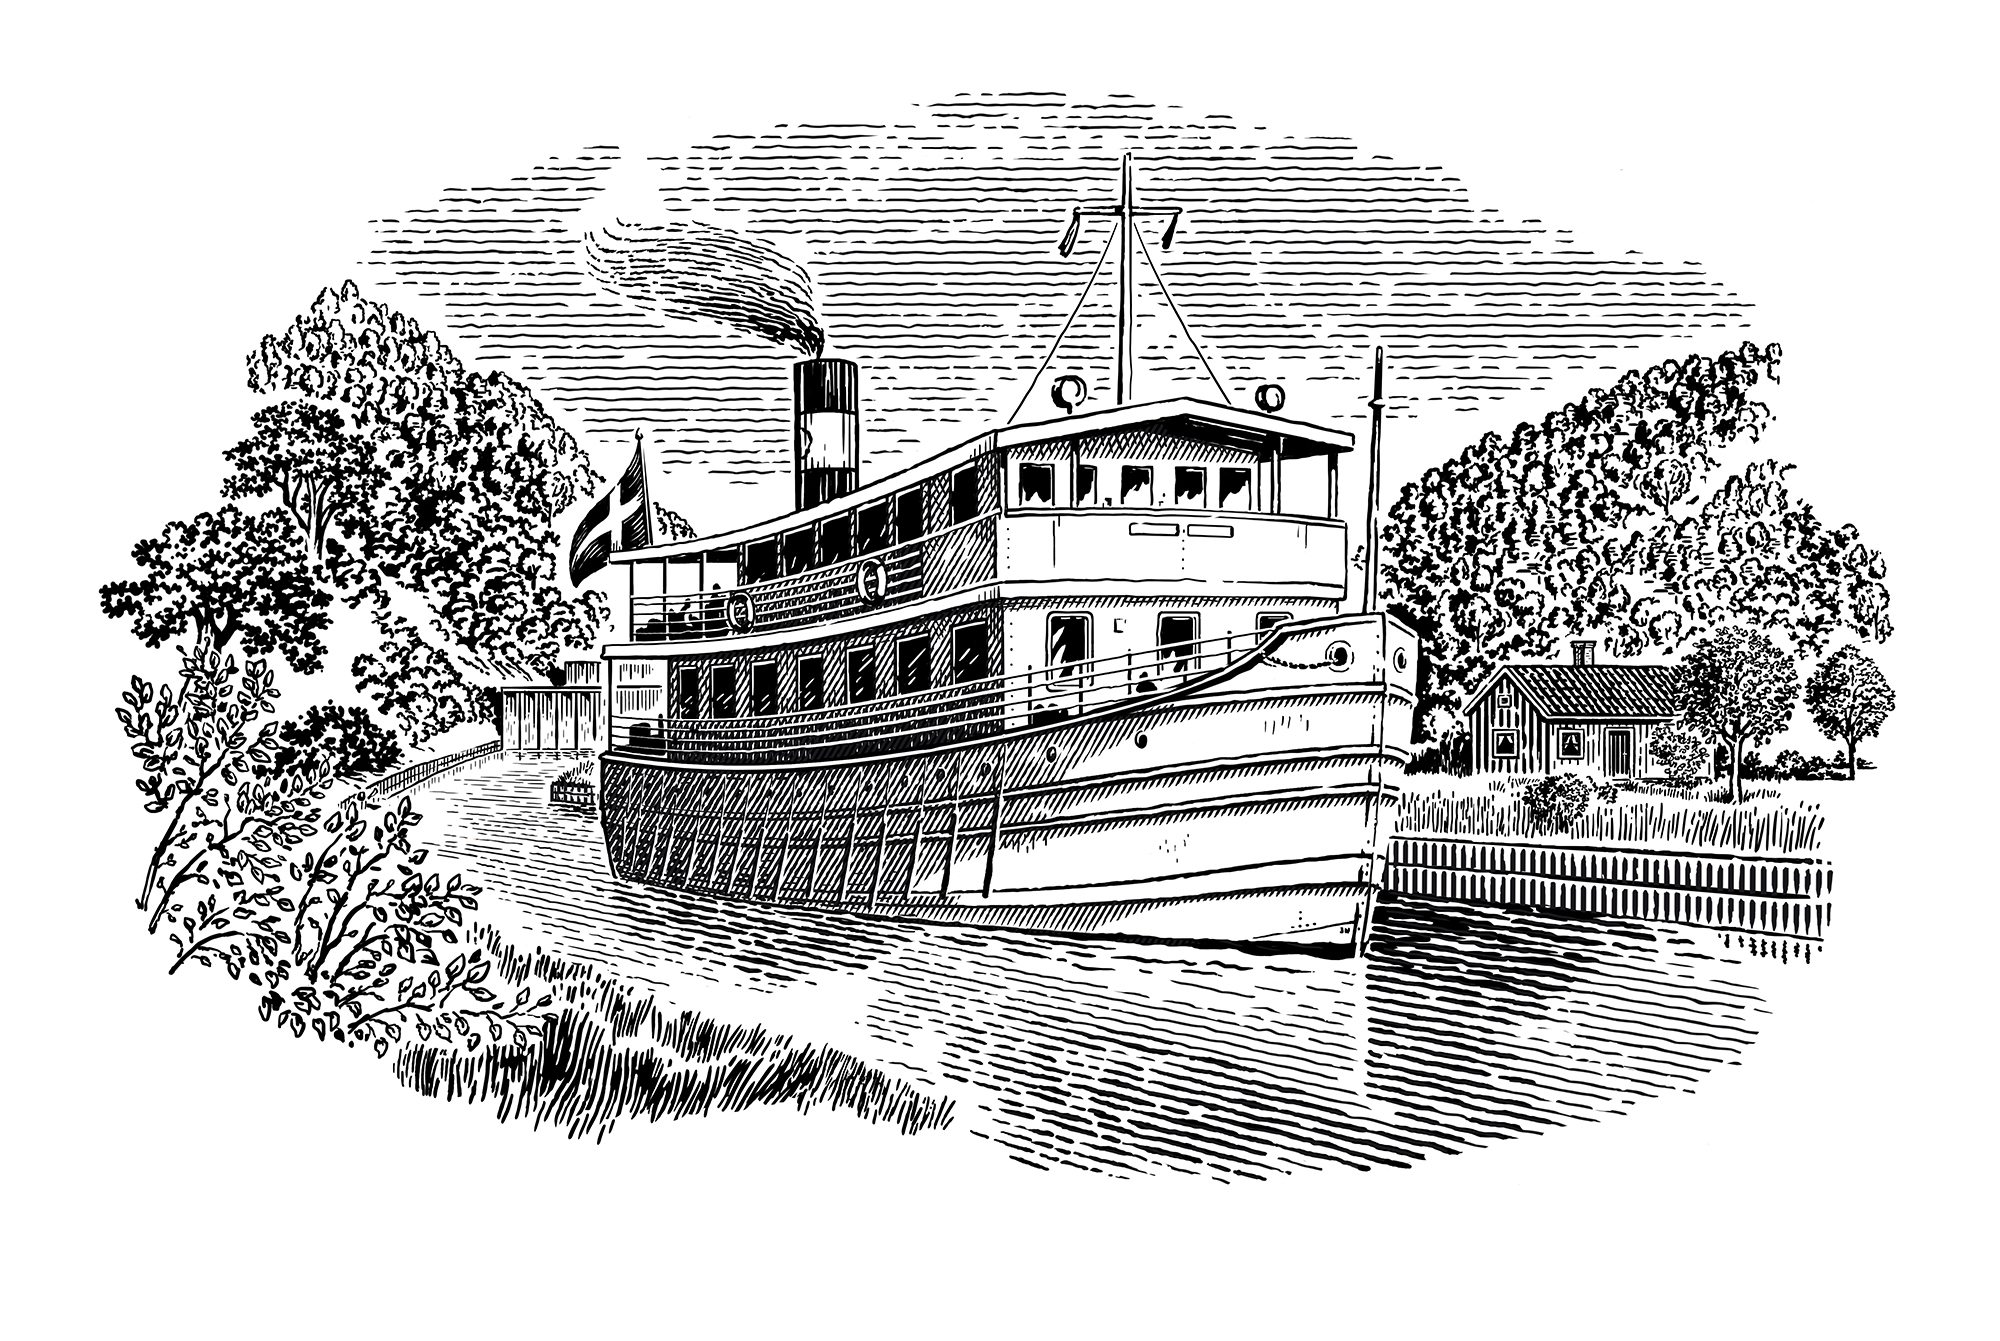 steamship, canal, Göta kanal, woodcut